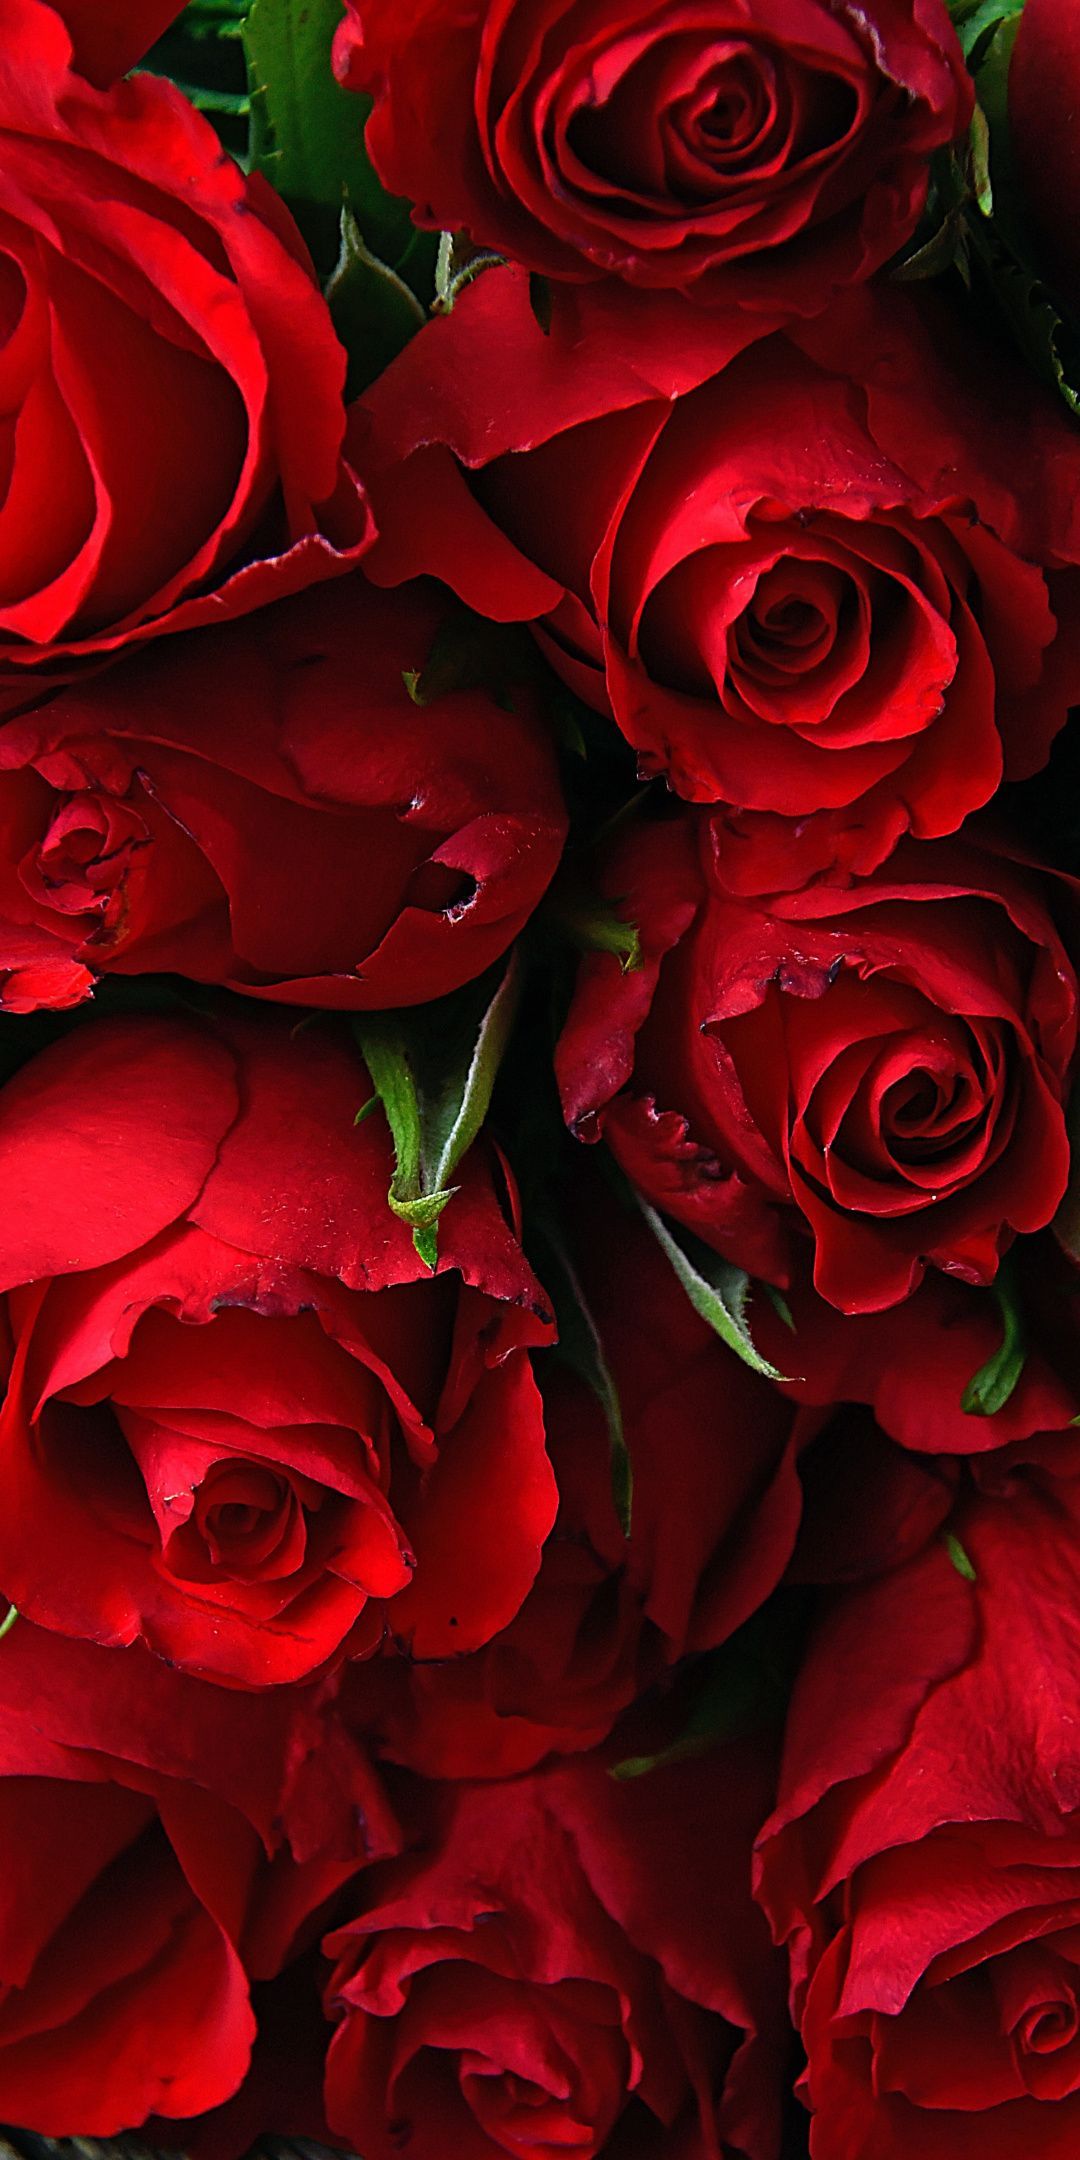 Rose, fresh, red flowers, 1080x2160 wallpaper. Red flower wallpaper, Red roses wallpaper, Rose flower wallpaper